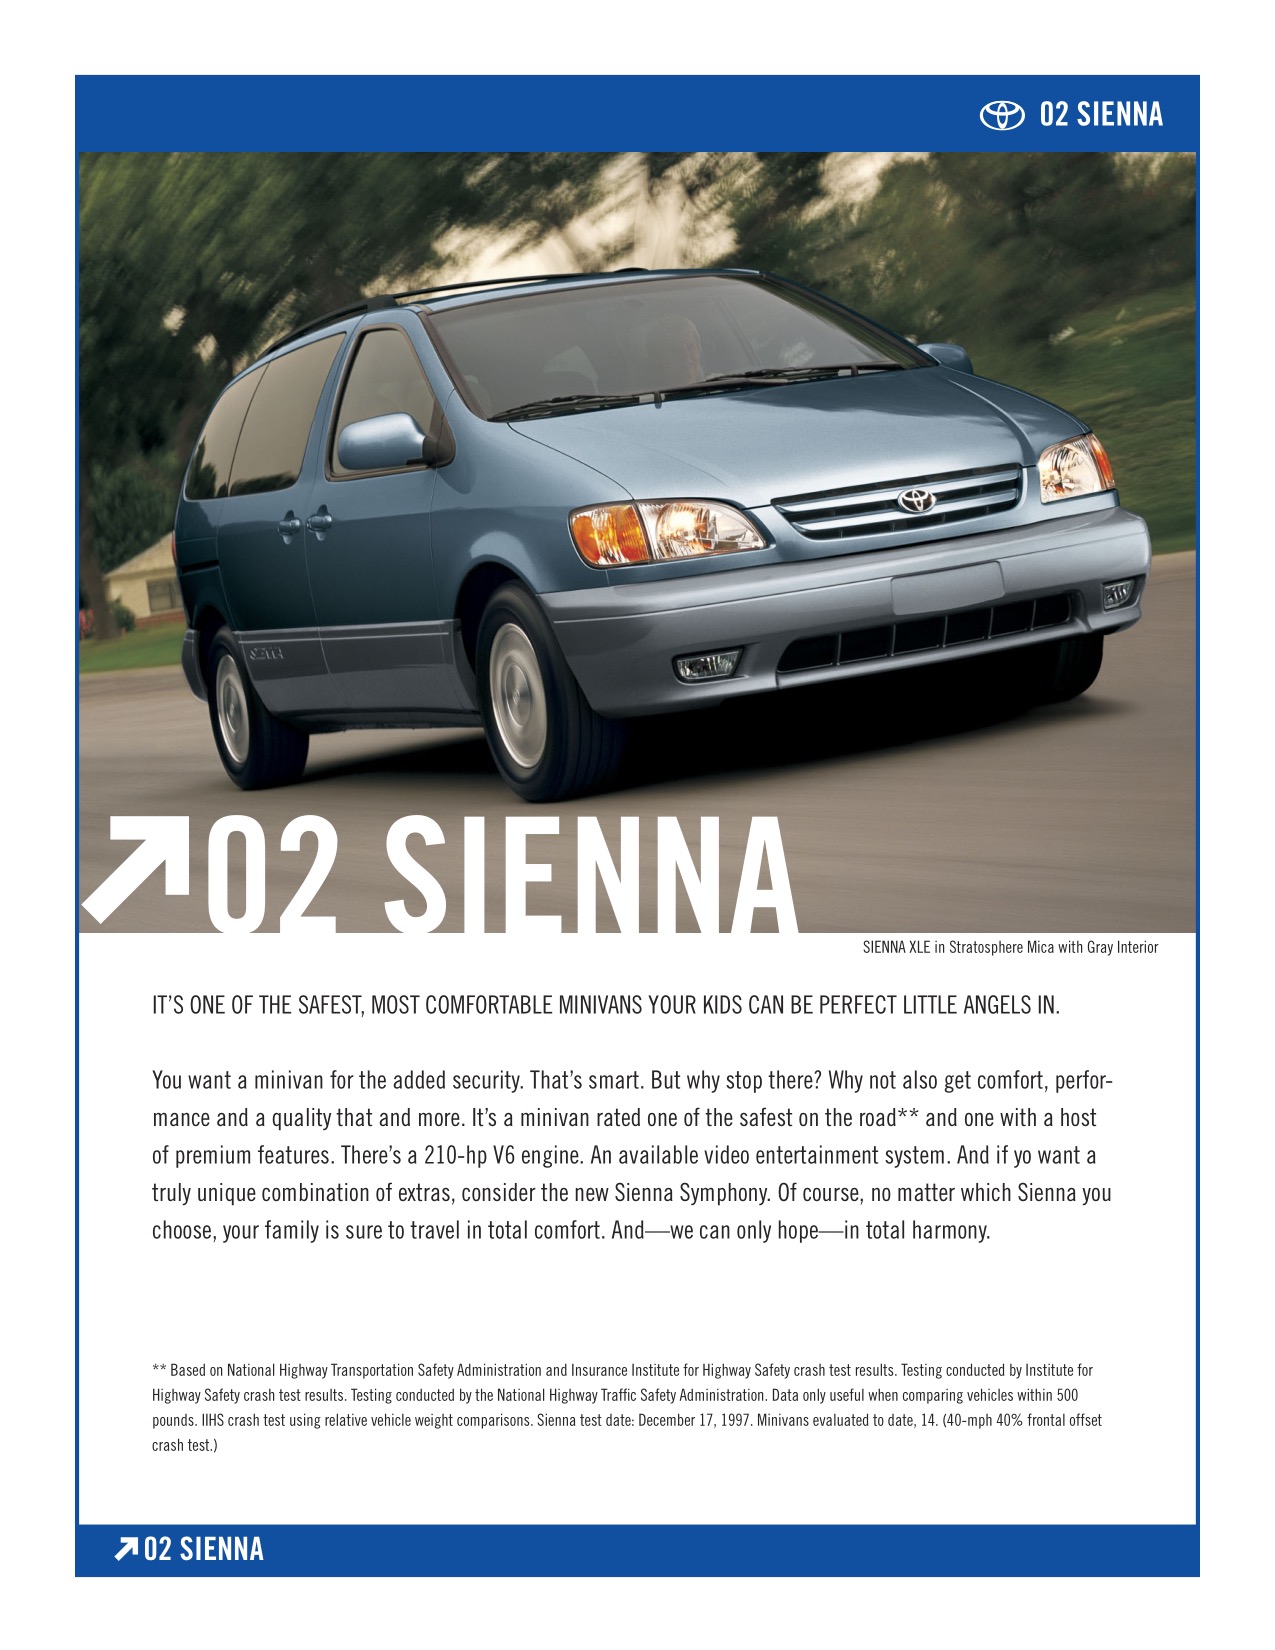 2002 Toyota Sienna Brochure